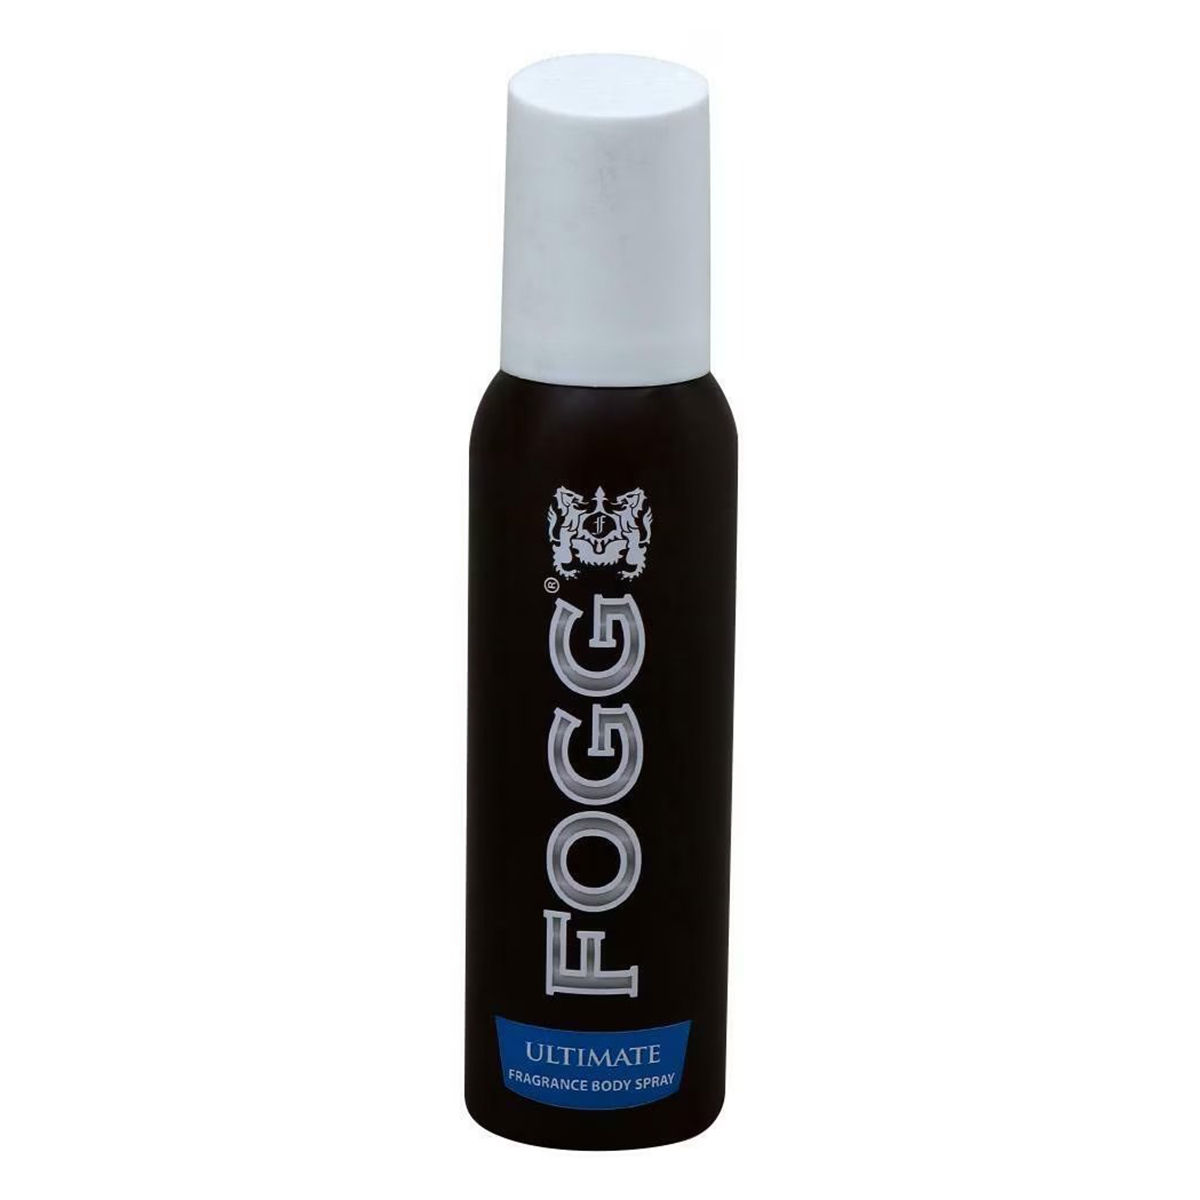 Buy Fogg Ultimate Fragrance Body Spray, 125gm Online